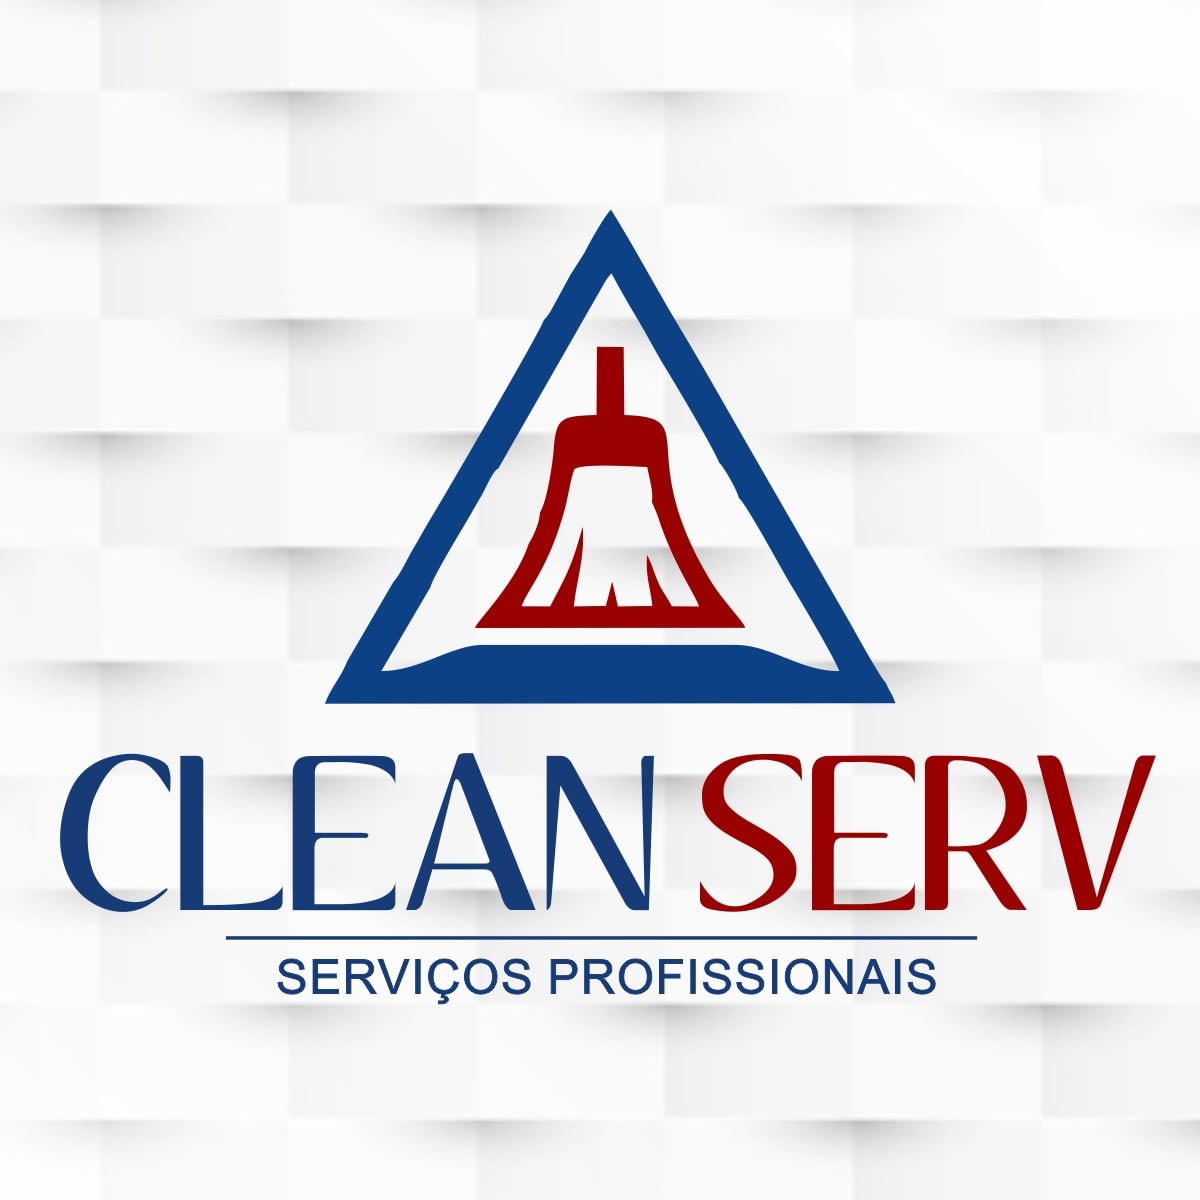 My Clean Serv